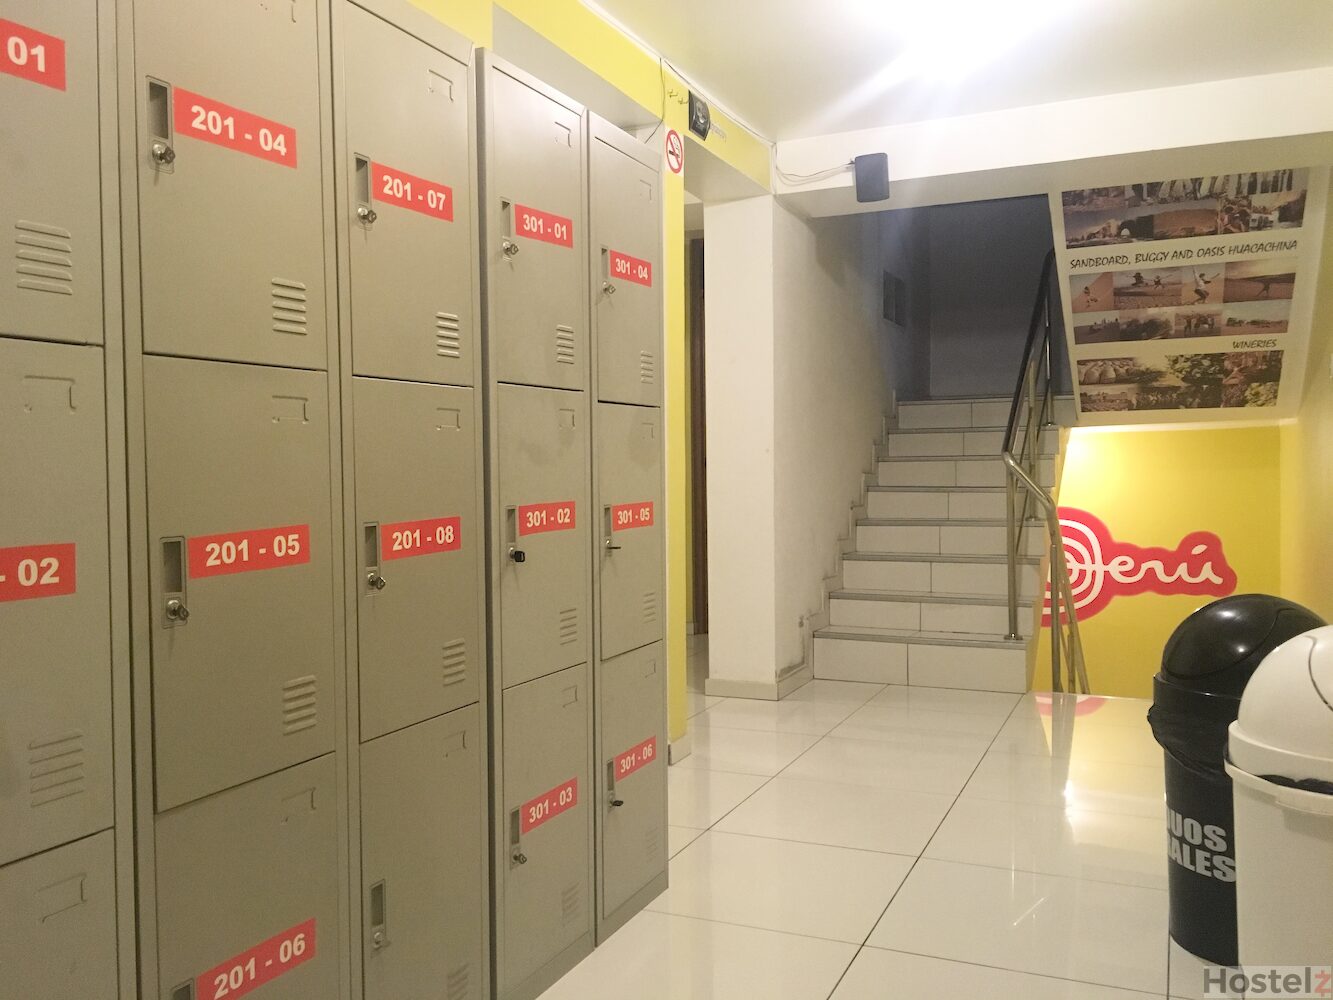 Corridor with lockers